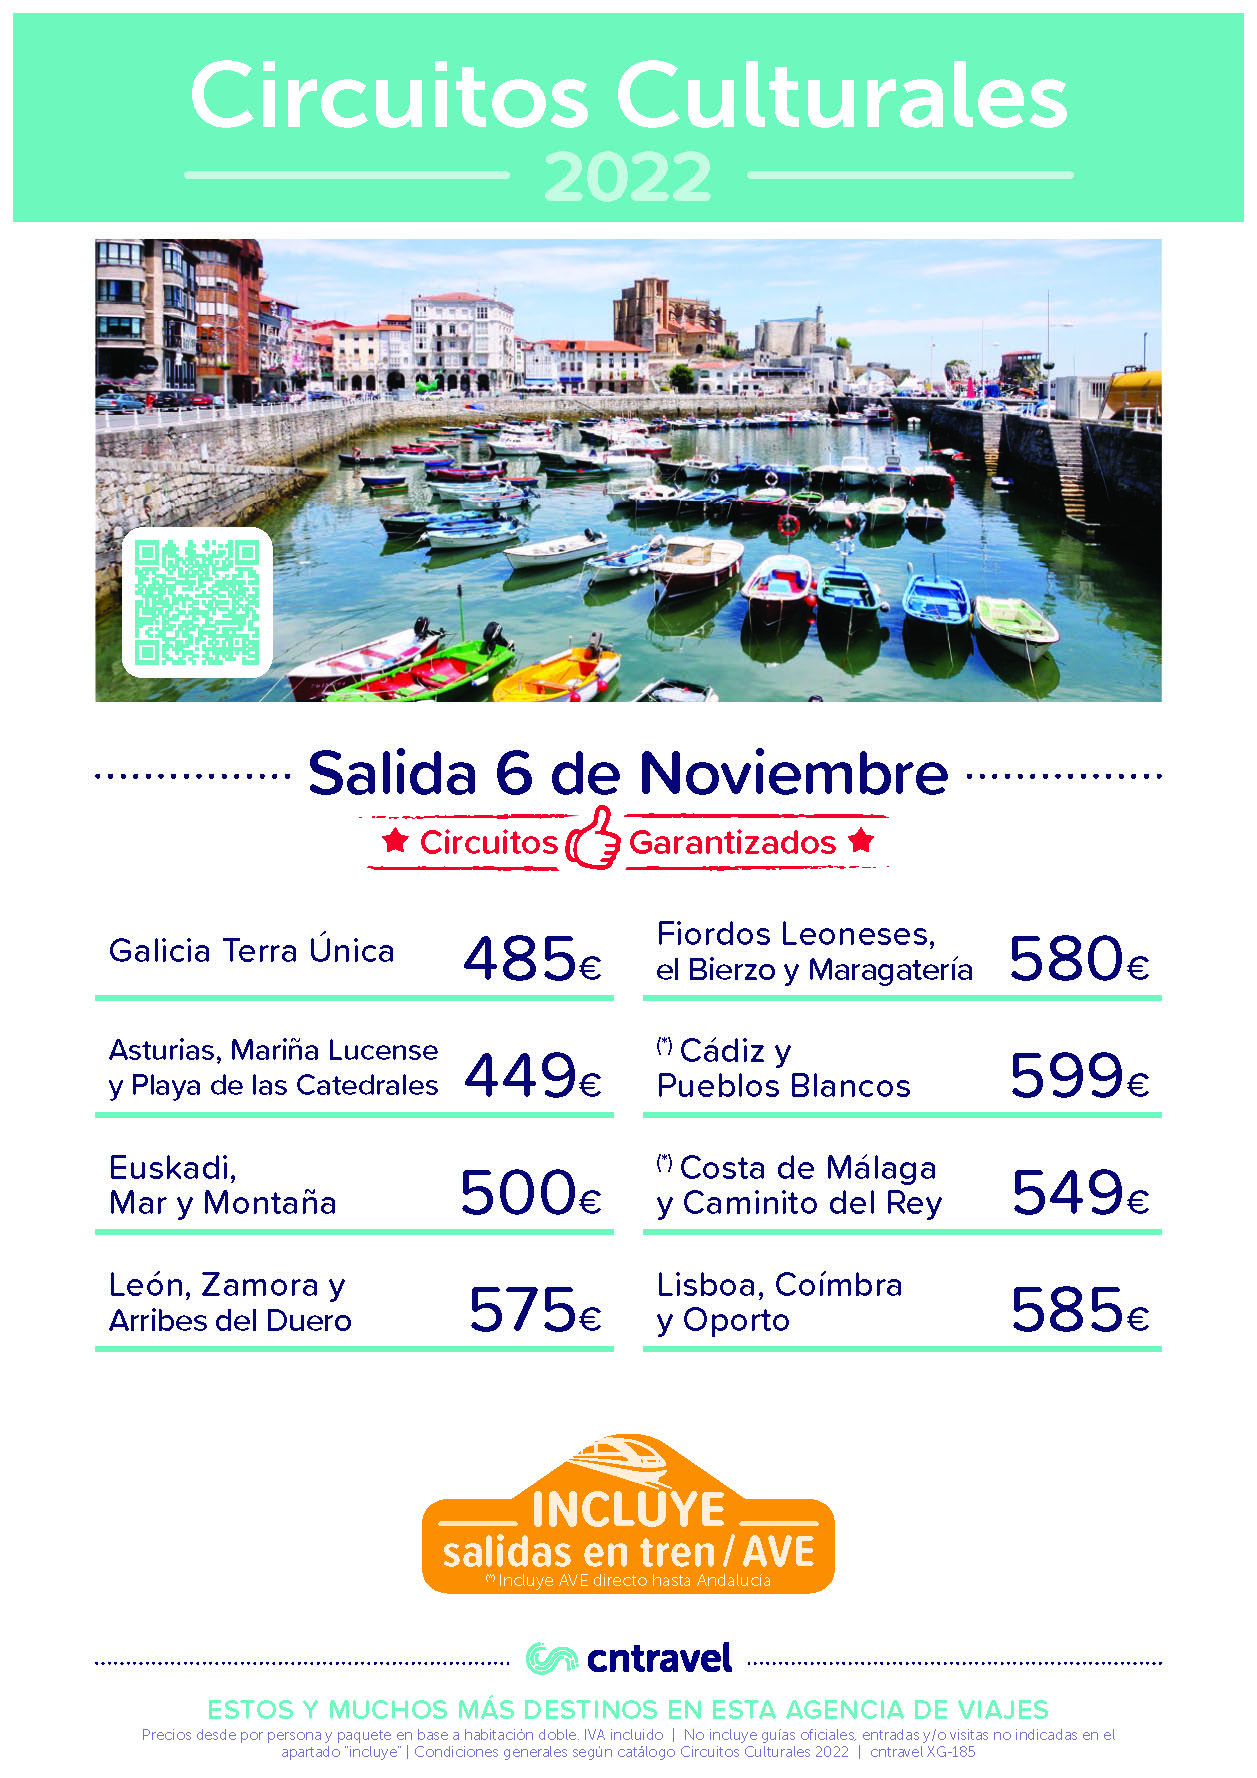 Oferta CN Travel Circuitos culturales Galicia Asturias Pais Vasco Portugal Castilla y Leon Andalucia salidas 6 noviembre 2022